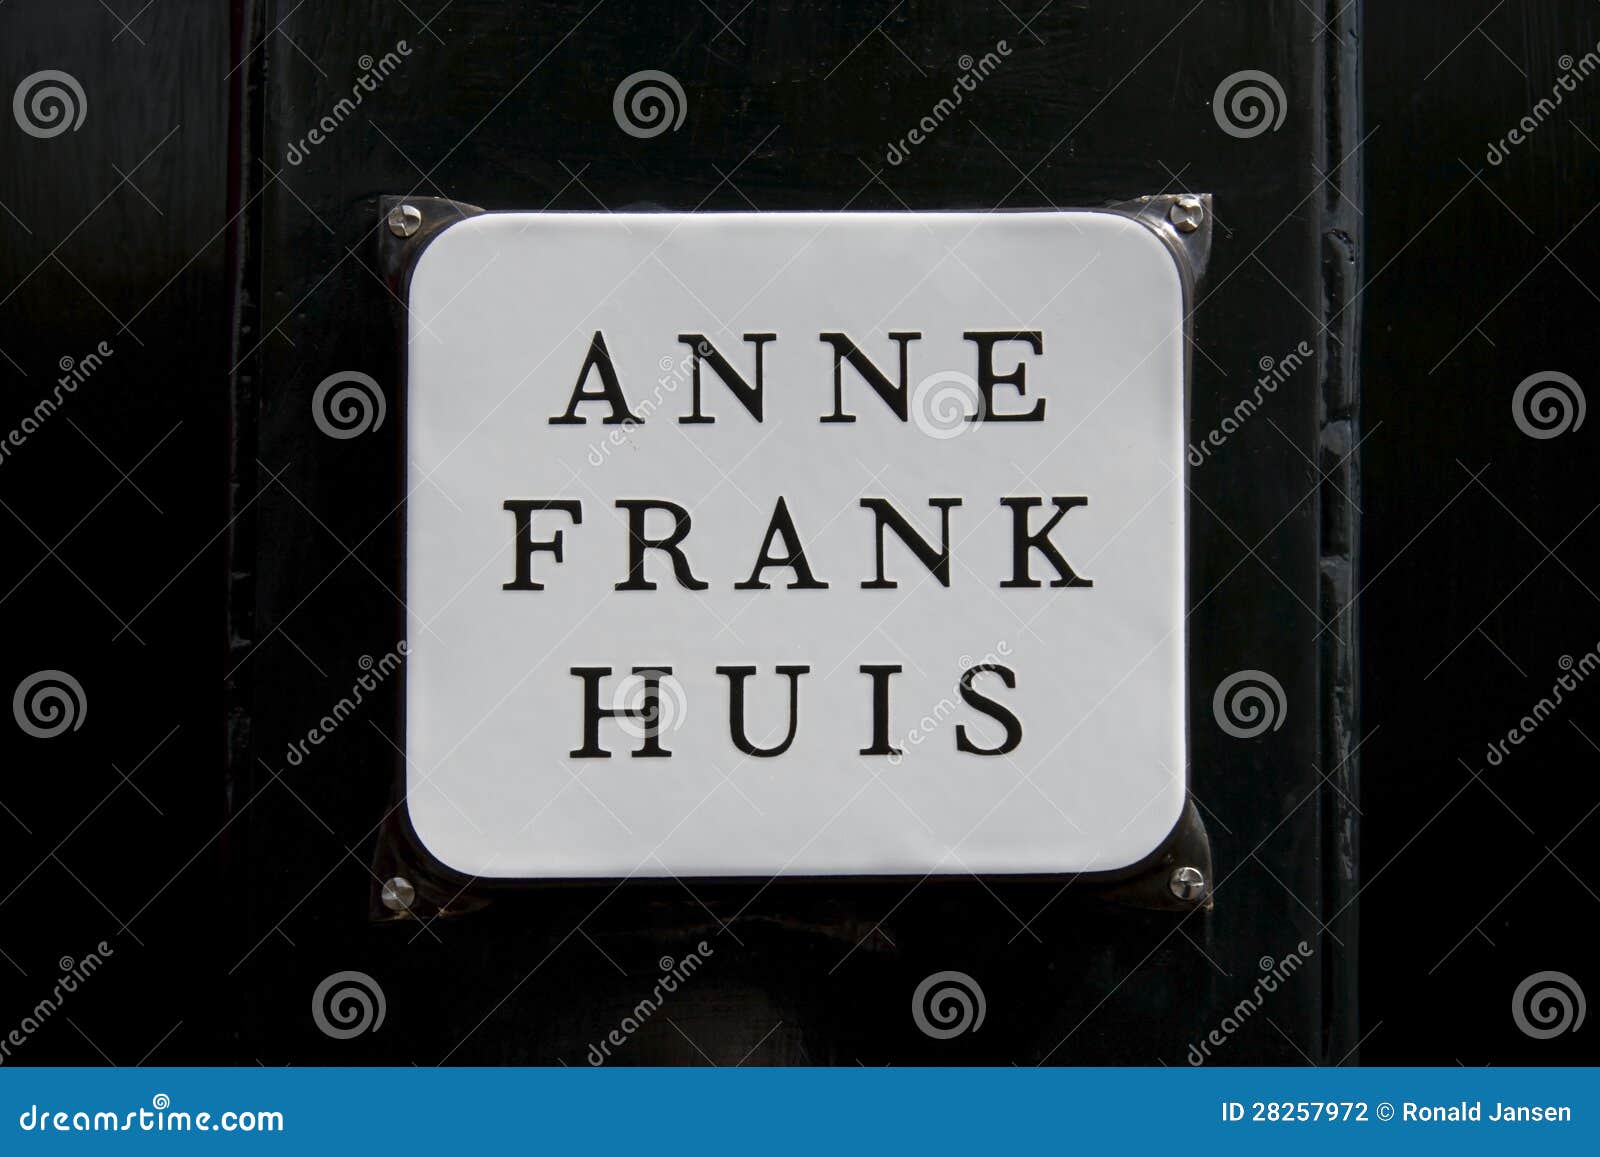 anne frank house, amsterdam